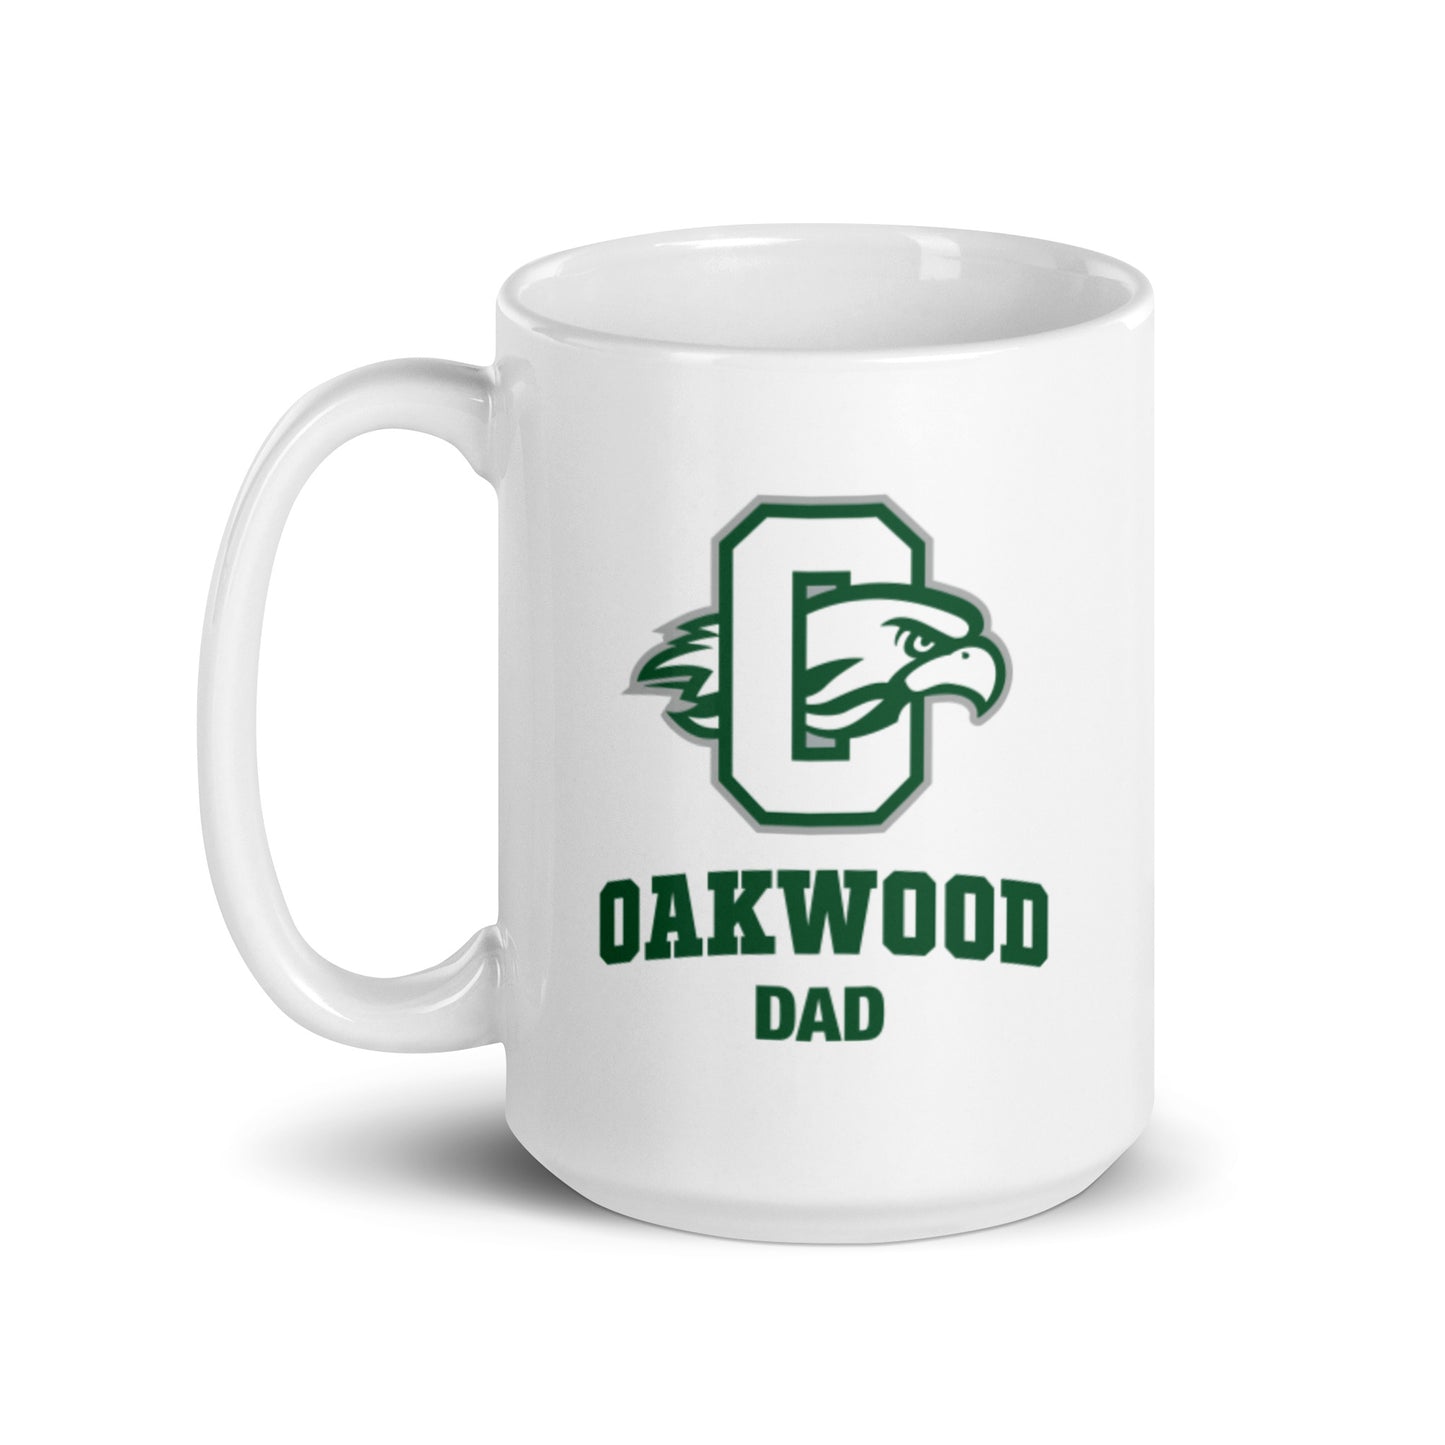 Oakwood Dad Mug